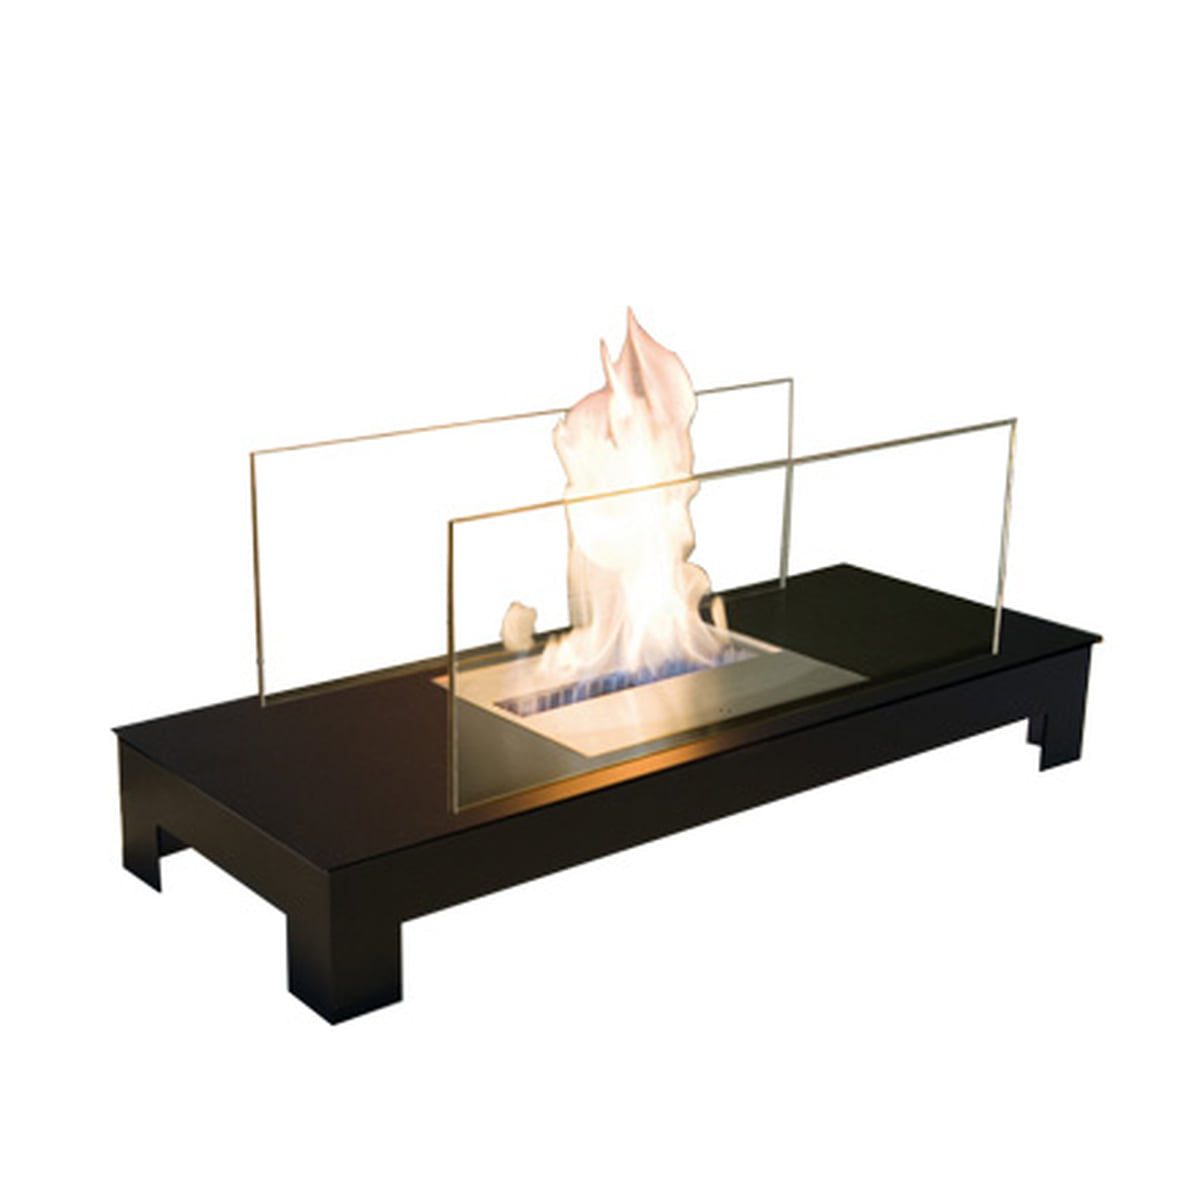 Radius Floor Flame | Ottevangers Lichtdesign